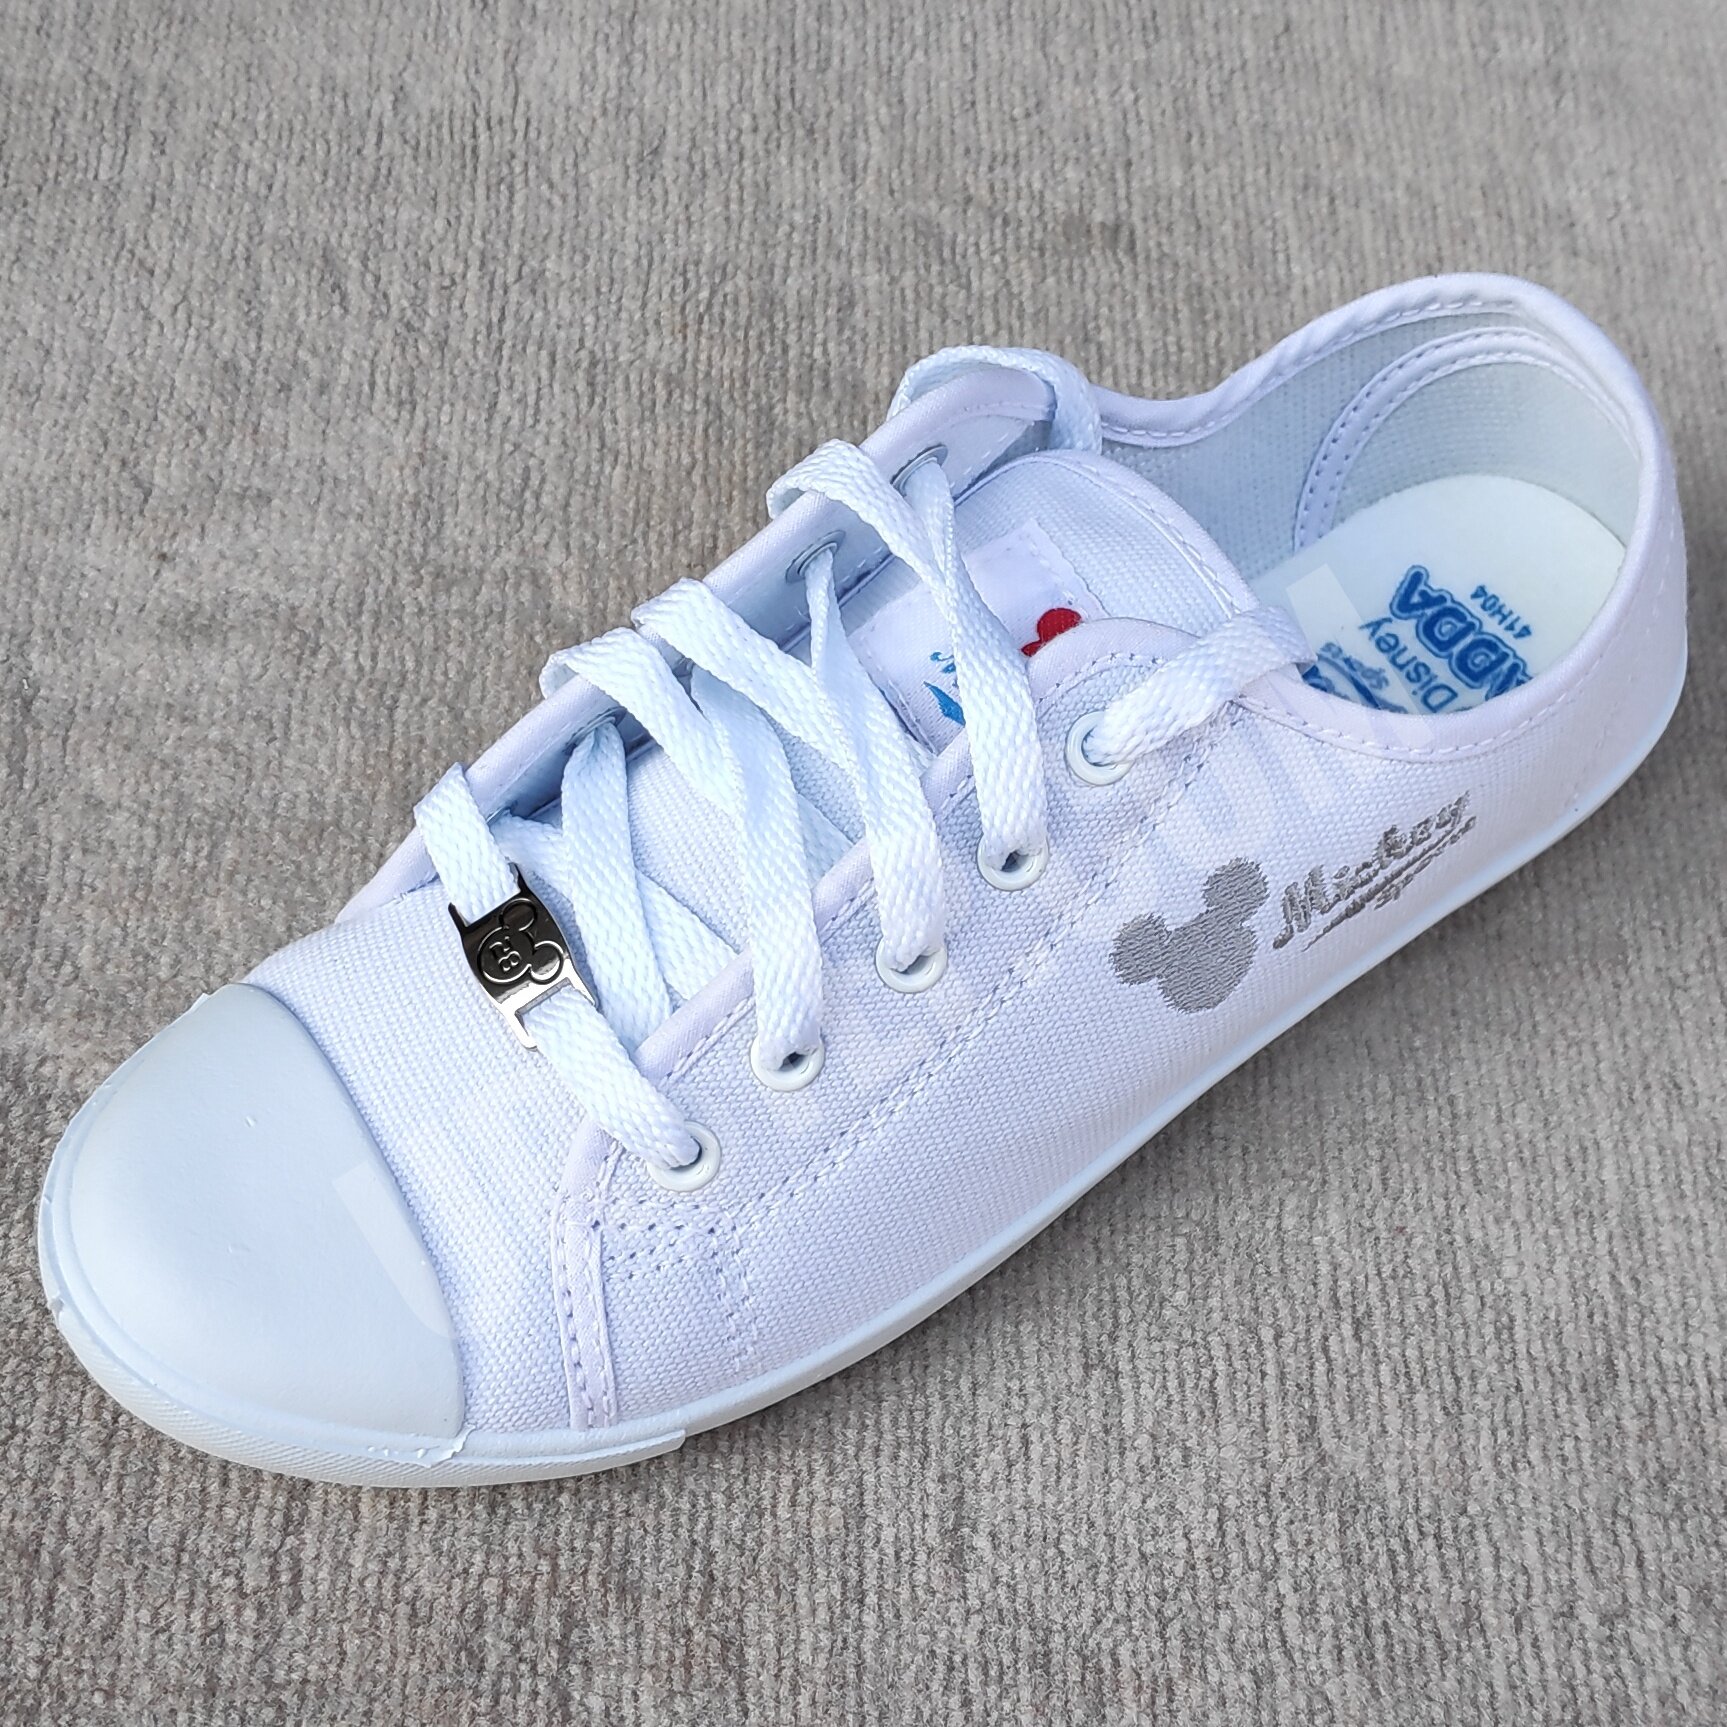 ADDA 41H04 รองเท้าผ้าใบนักเรียน Mickey Mouse รองเท้าพละ รองเท้าผ้าใบสีขาว